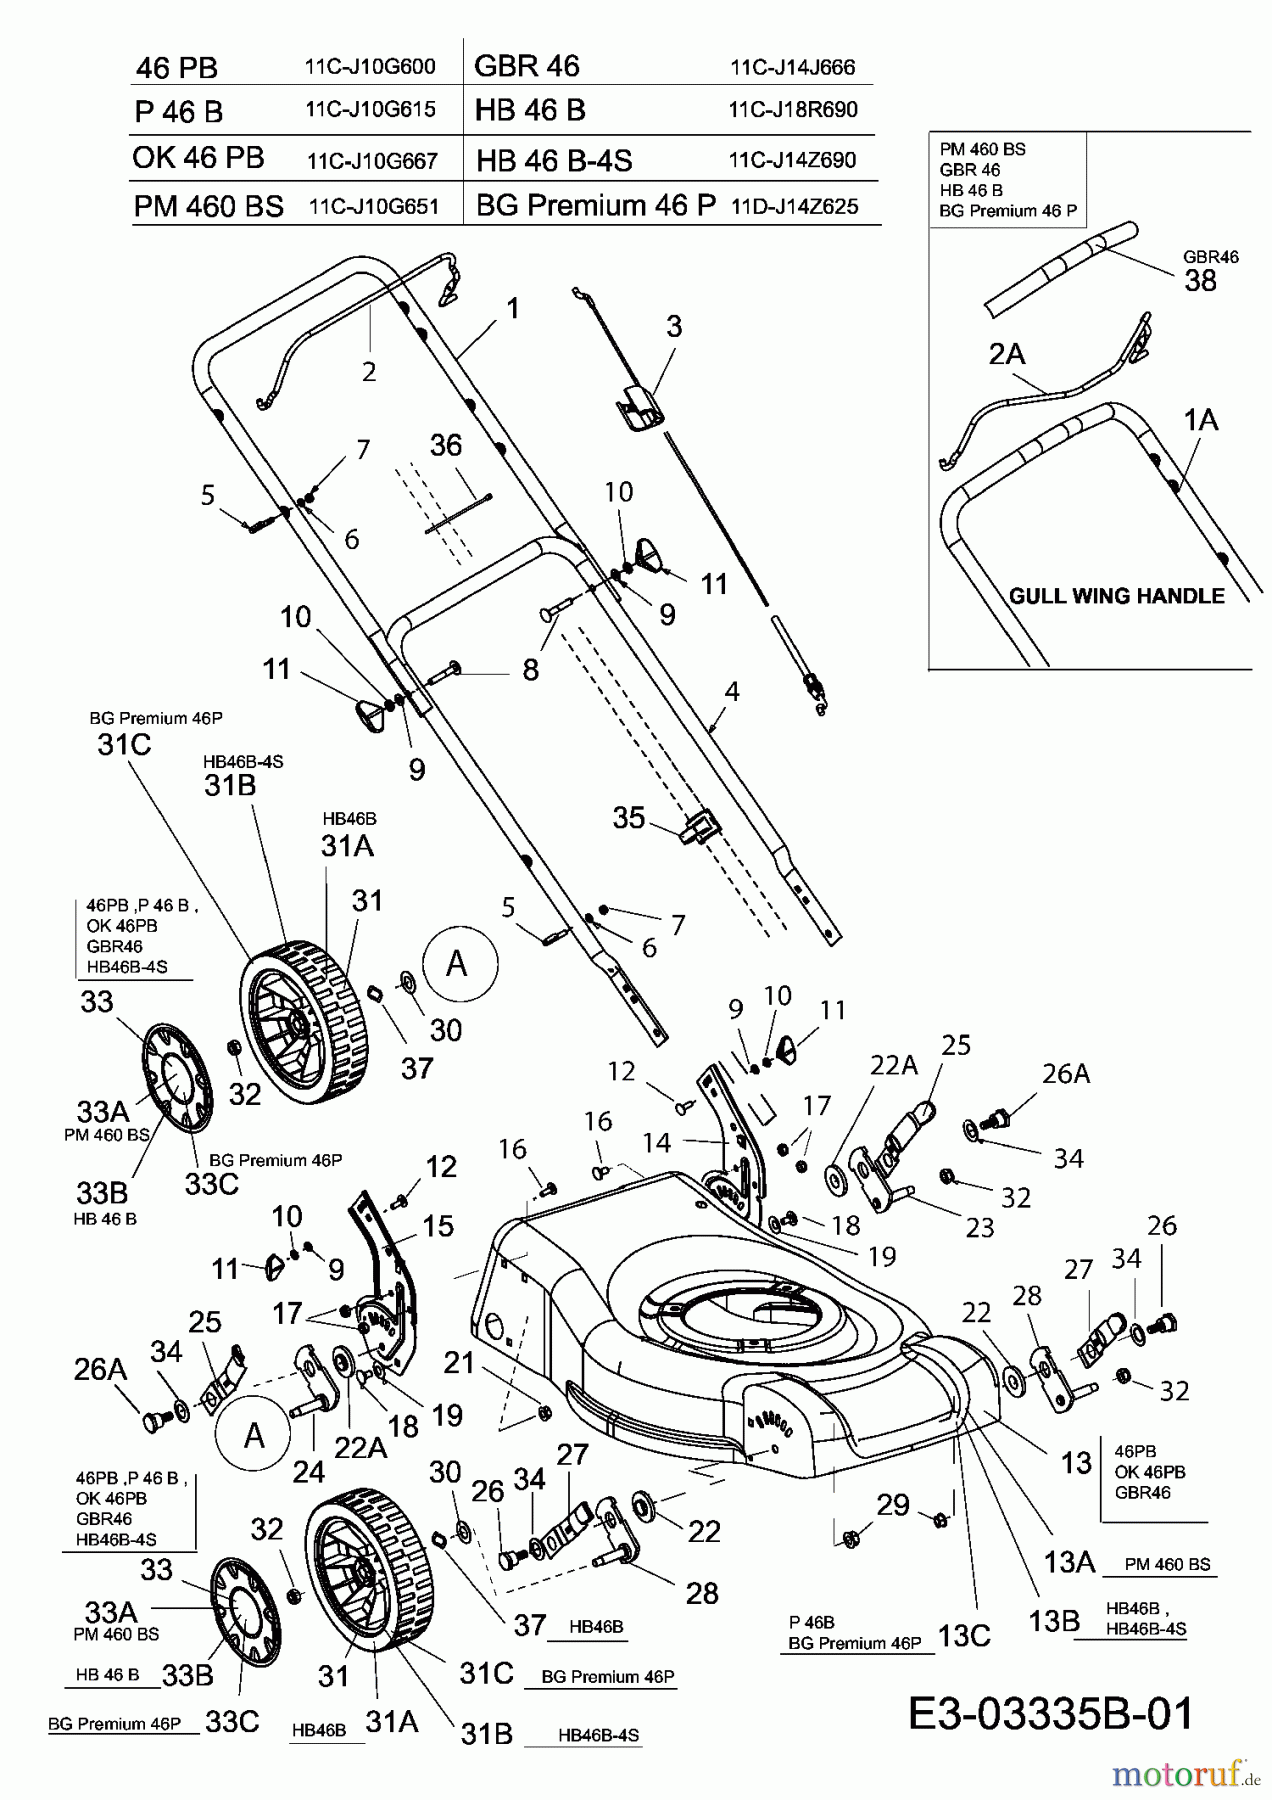  Gutbrod Petrol mower HB 46 B 11C-J18R690  (2008) Handle, Wheels, Cutting hight adjustment